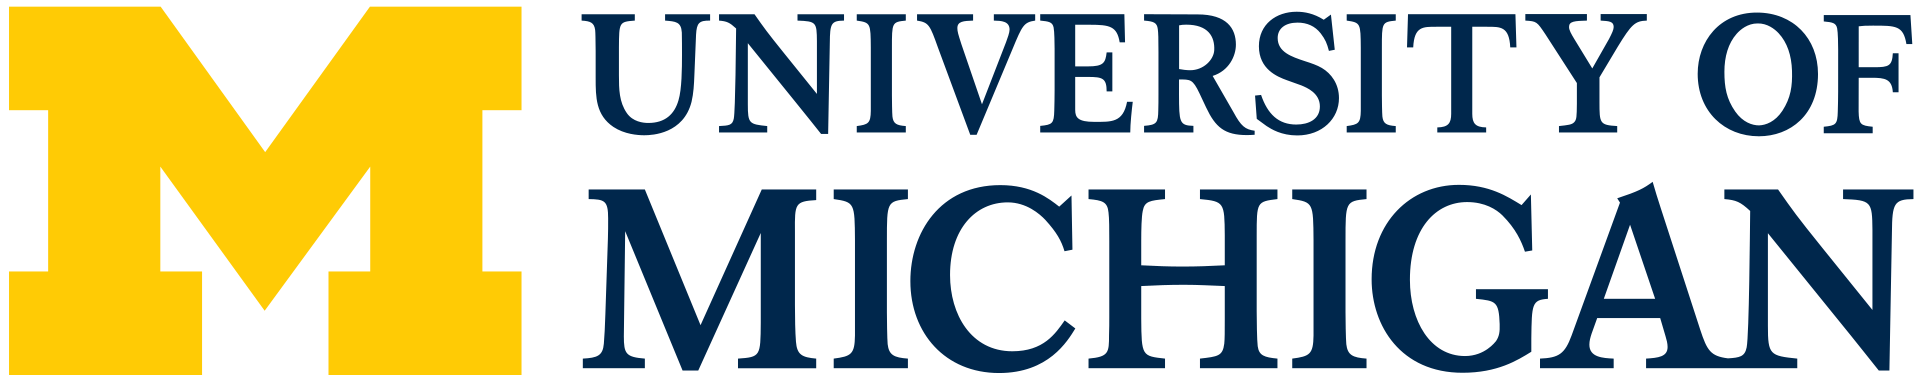 University of Michigan logo, By University of Michigan - http://vpcomm.umich.edu/brand/downloads/um-logo, Public Domain, http://commons.wikimedia.org/w/index.php?curid=71242380"